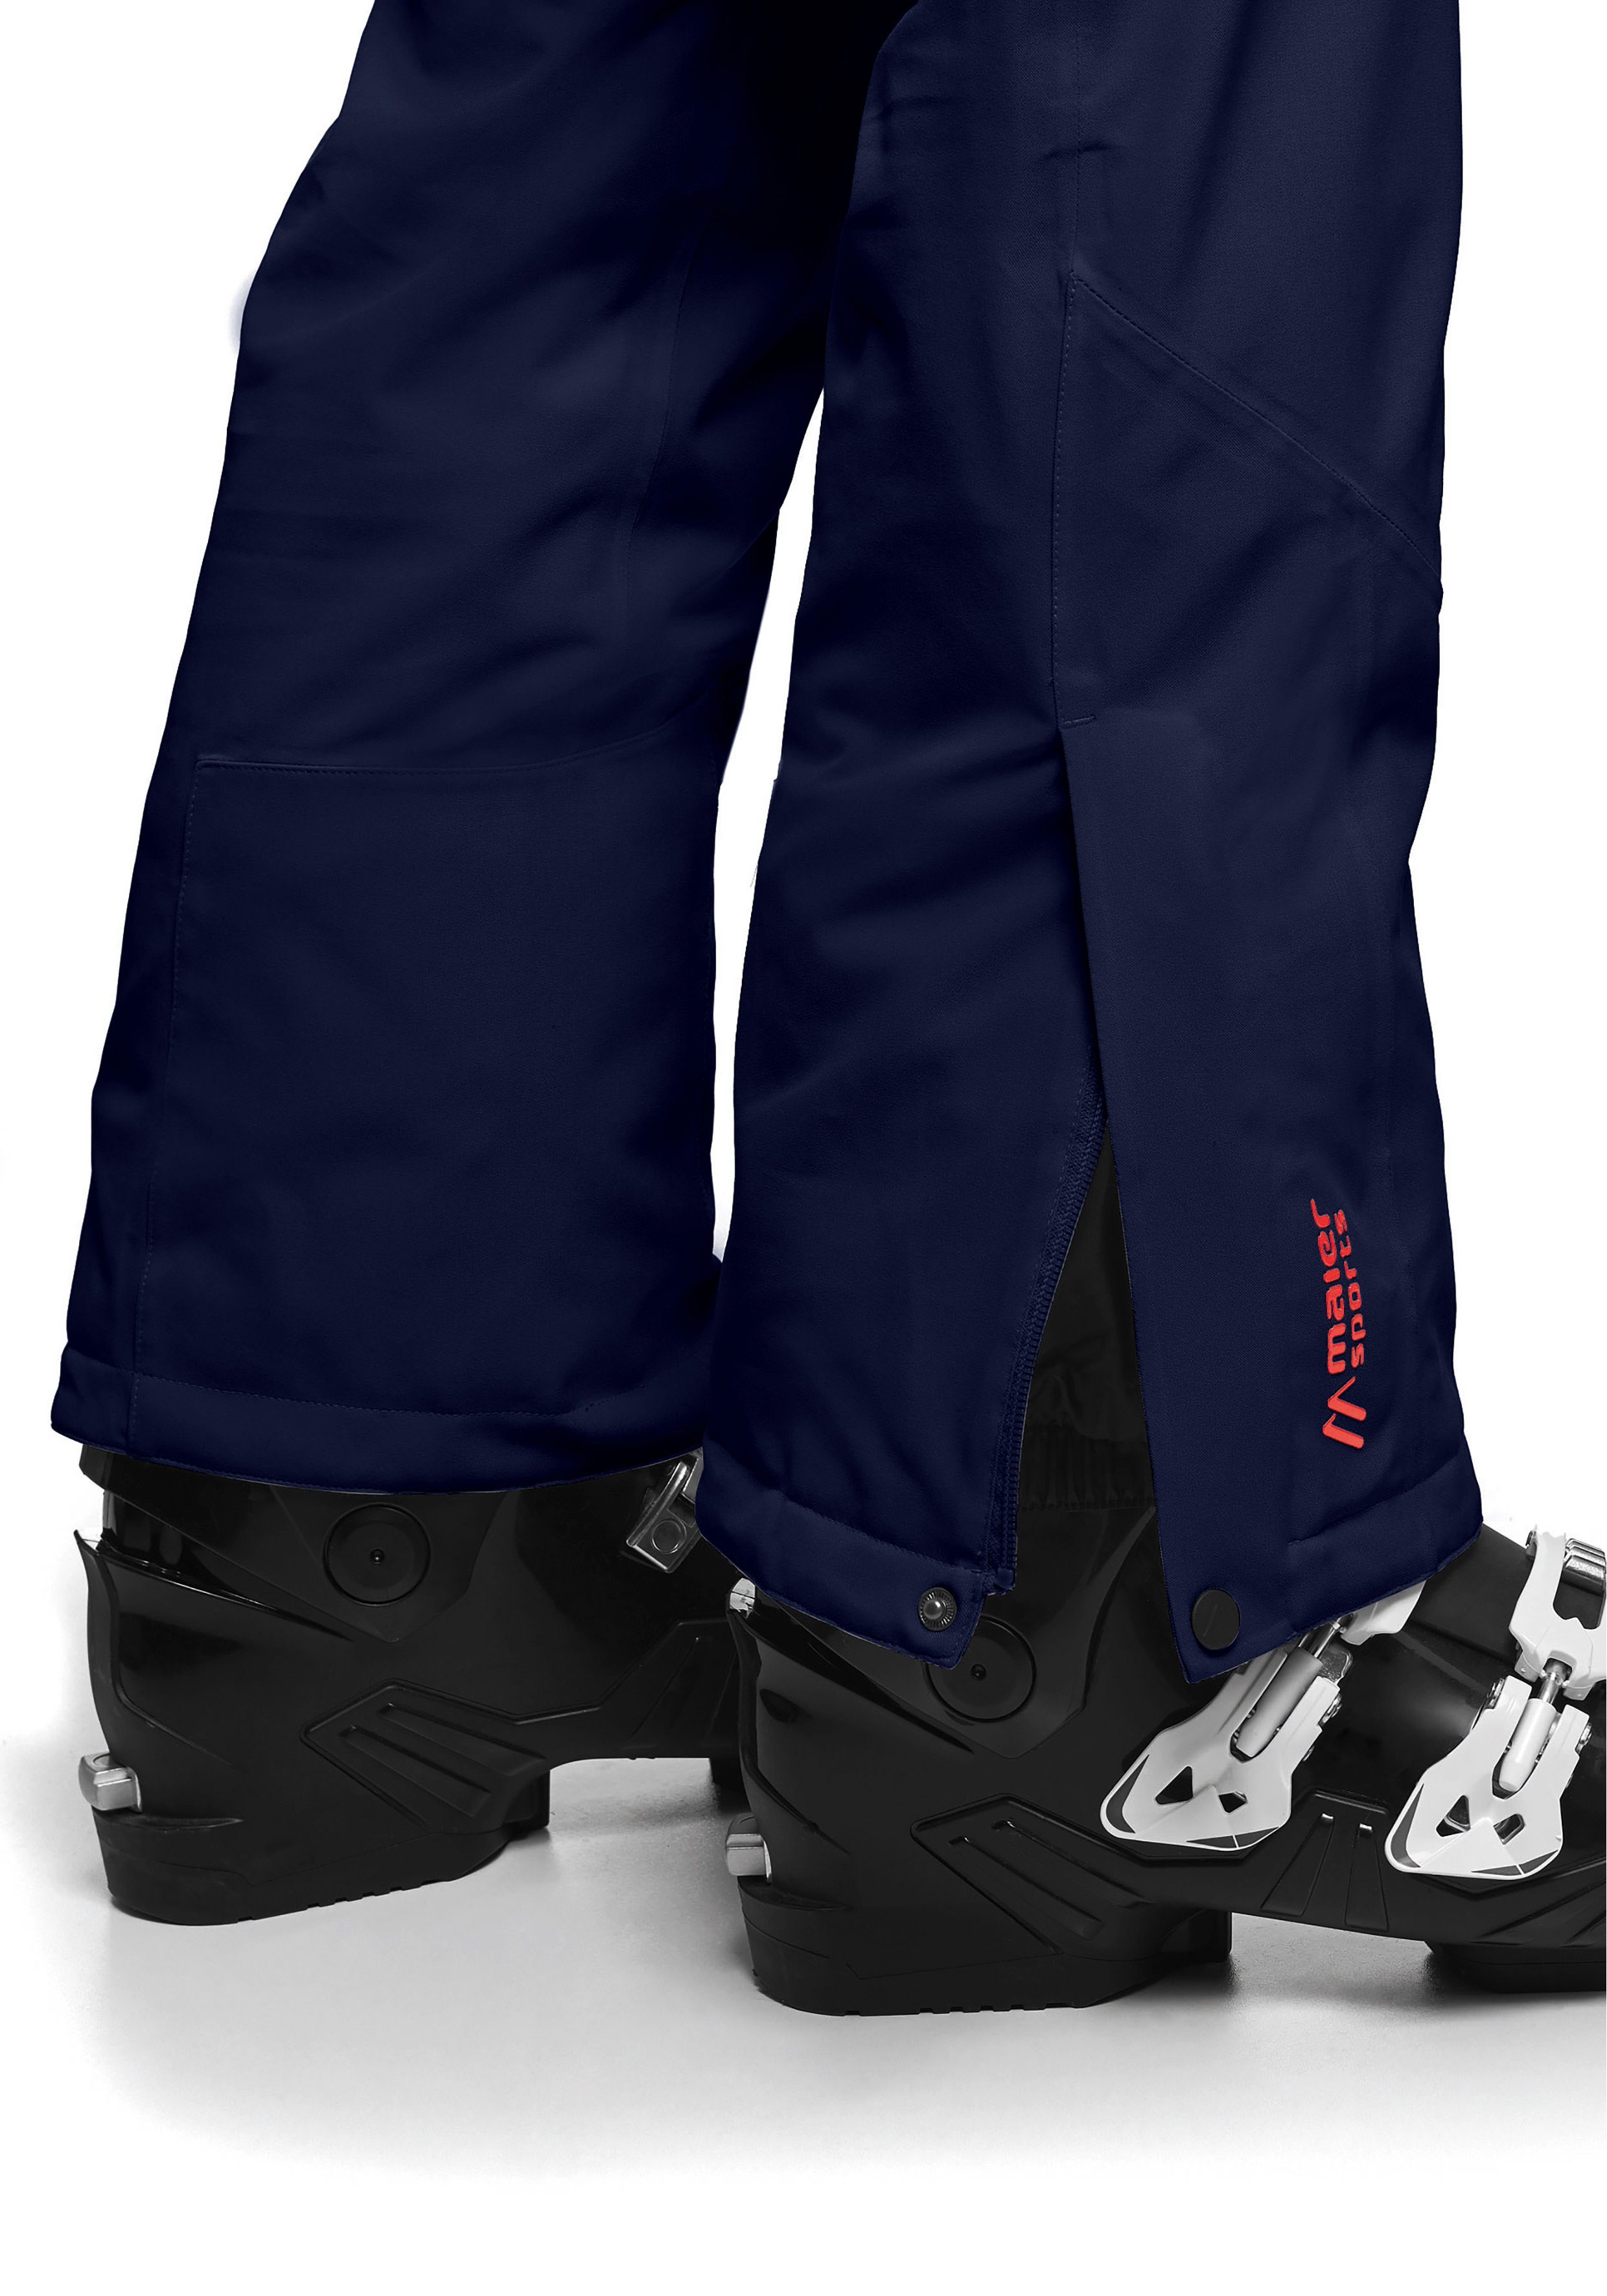 Maier Sports Silhouette Coral Pants in dunkelblau Skihose Skihose sportliche schlanker Feminin